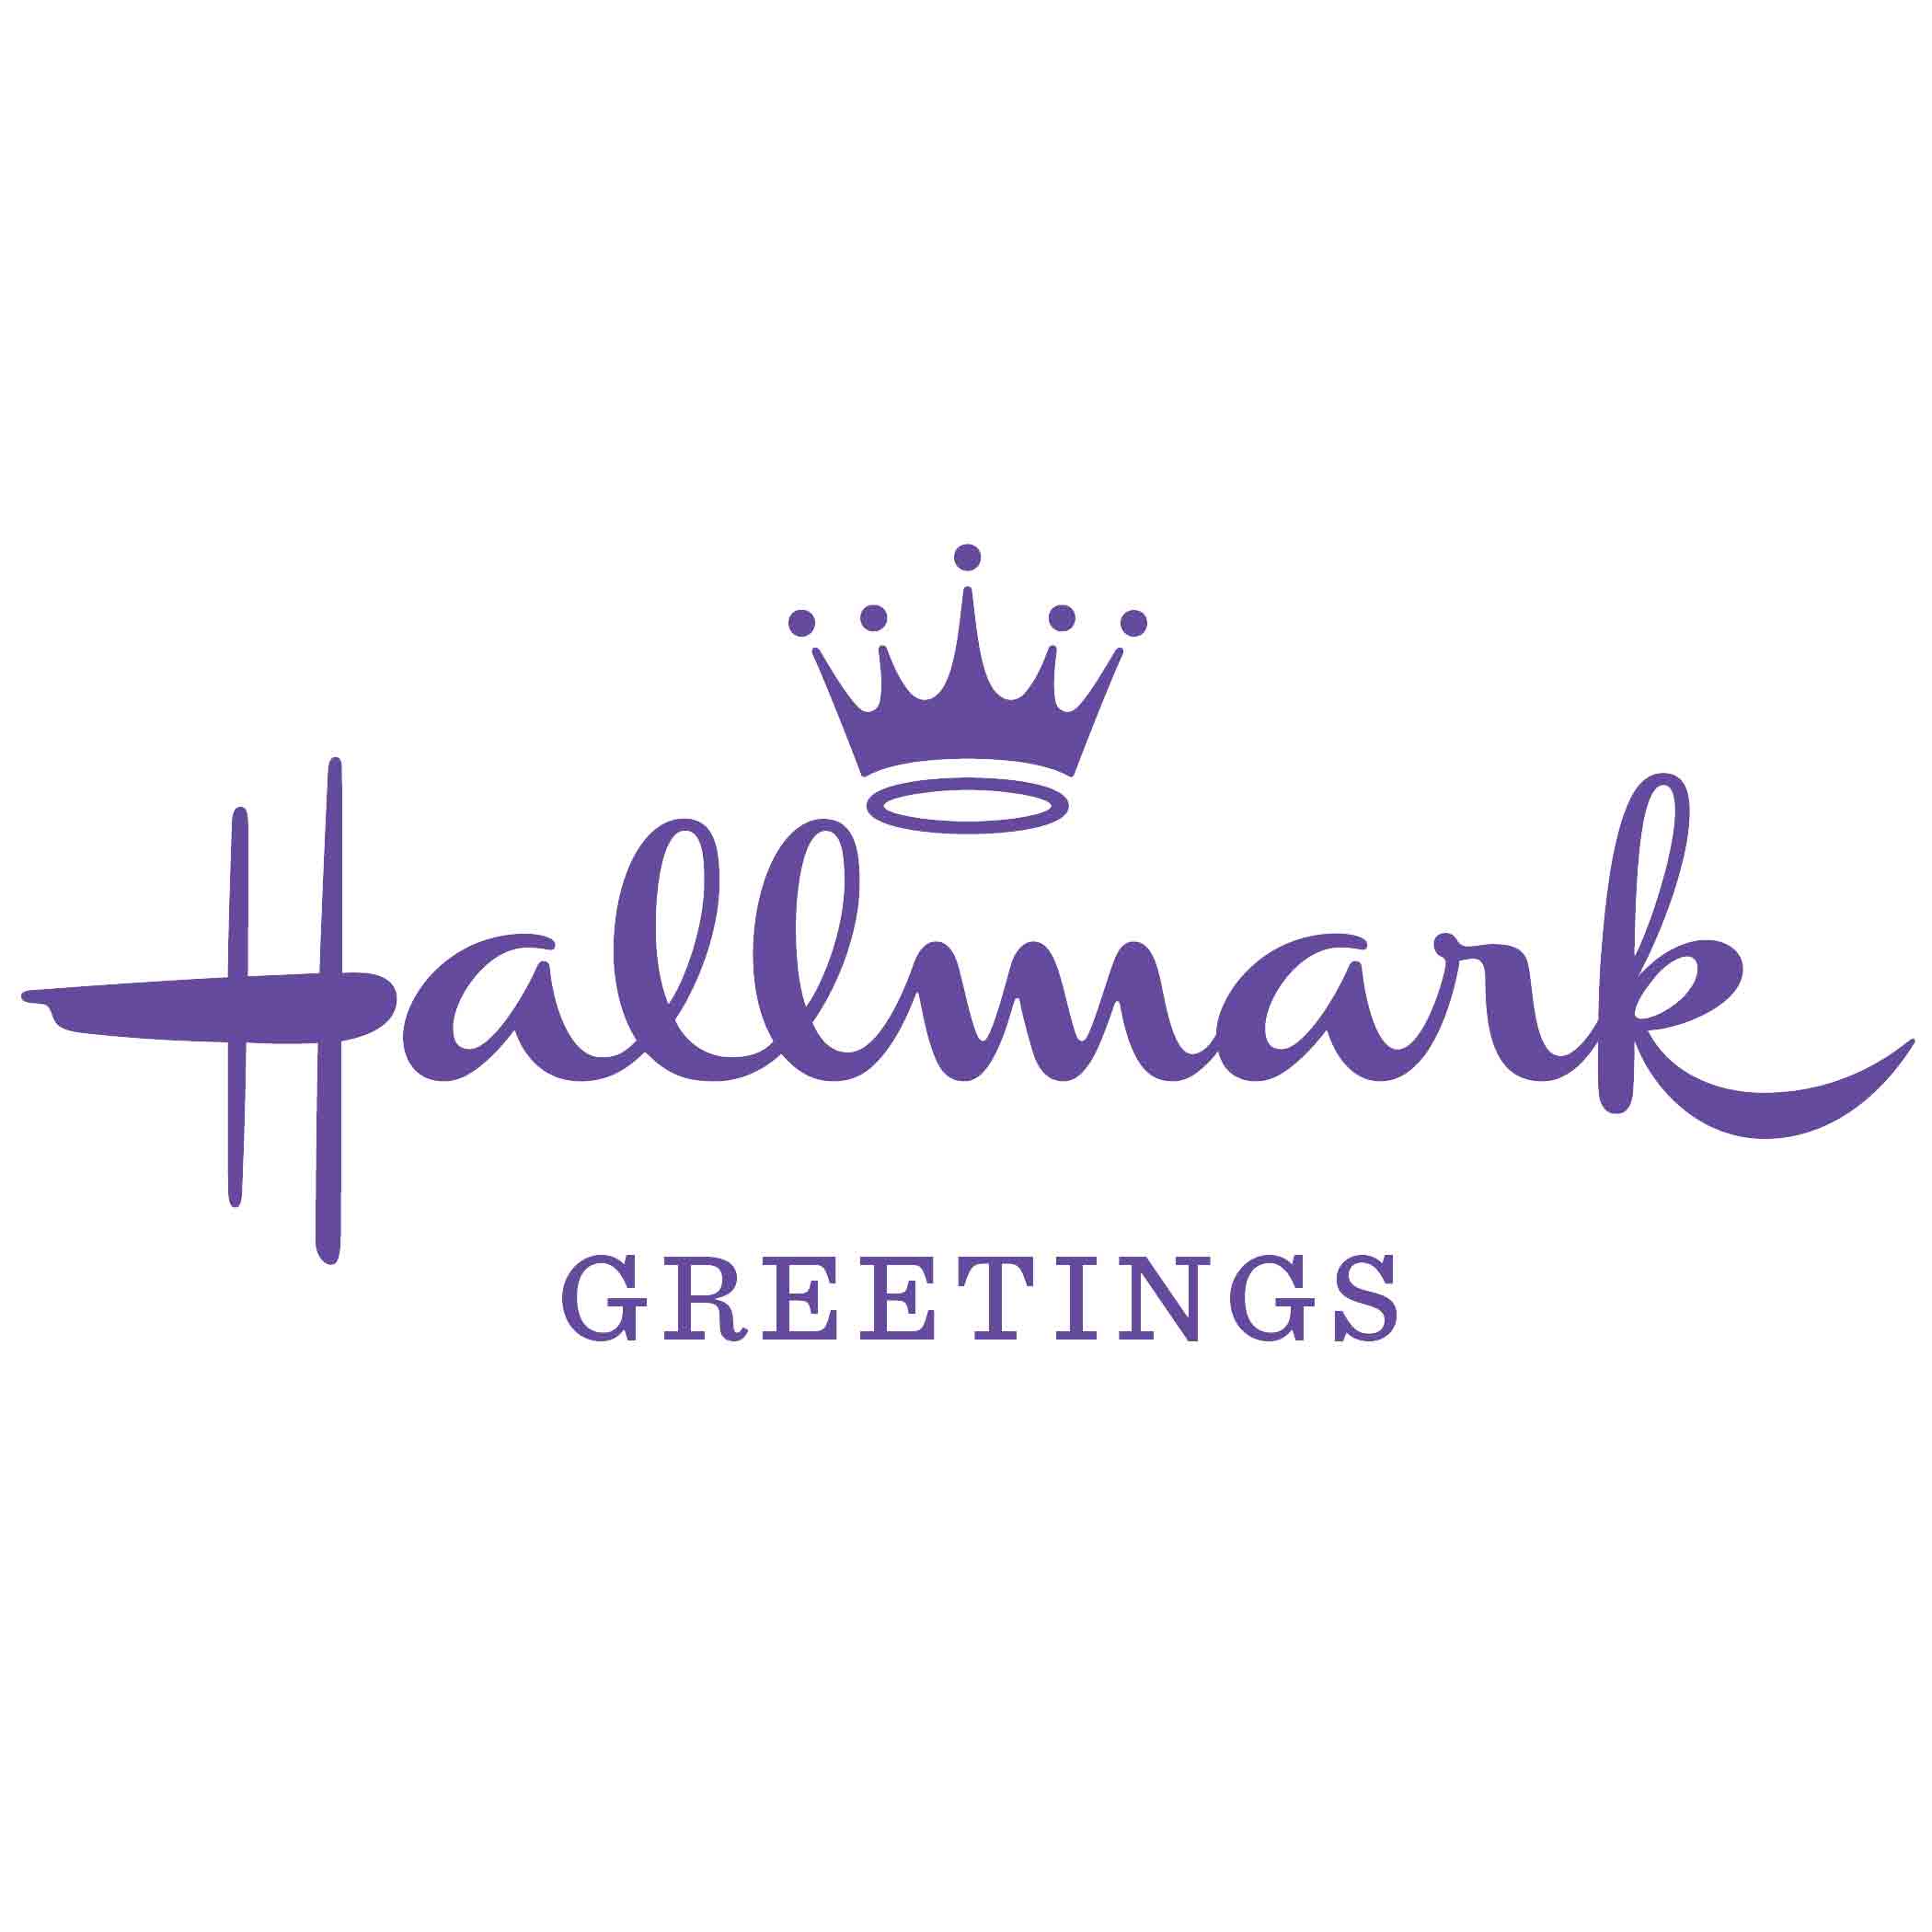 Halmark Logo - Hallmark Greetings Logo - Hallmark Corporate